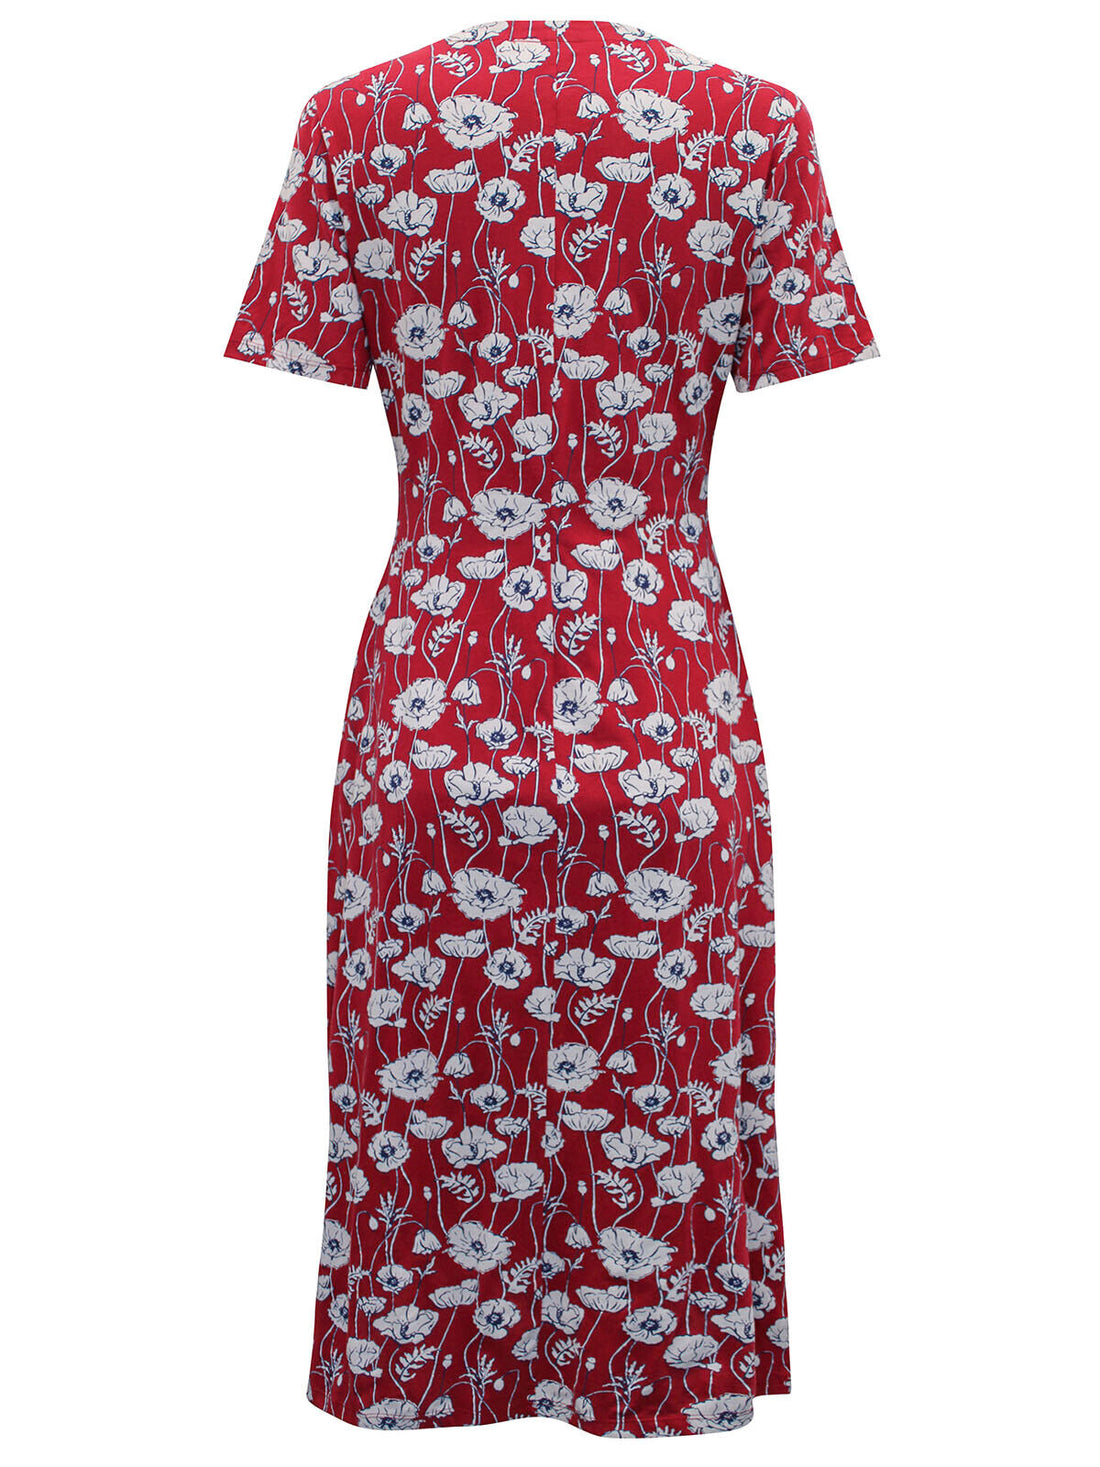 EX Seasalt Red Linear Poppy Rudder Lilian Tea Dress 8 10 12 14 16 18 20 RRP £60